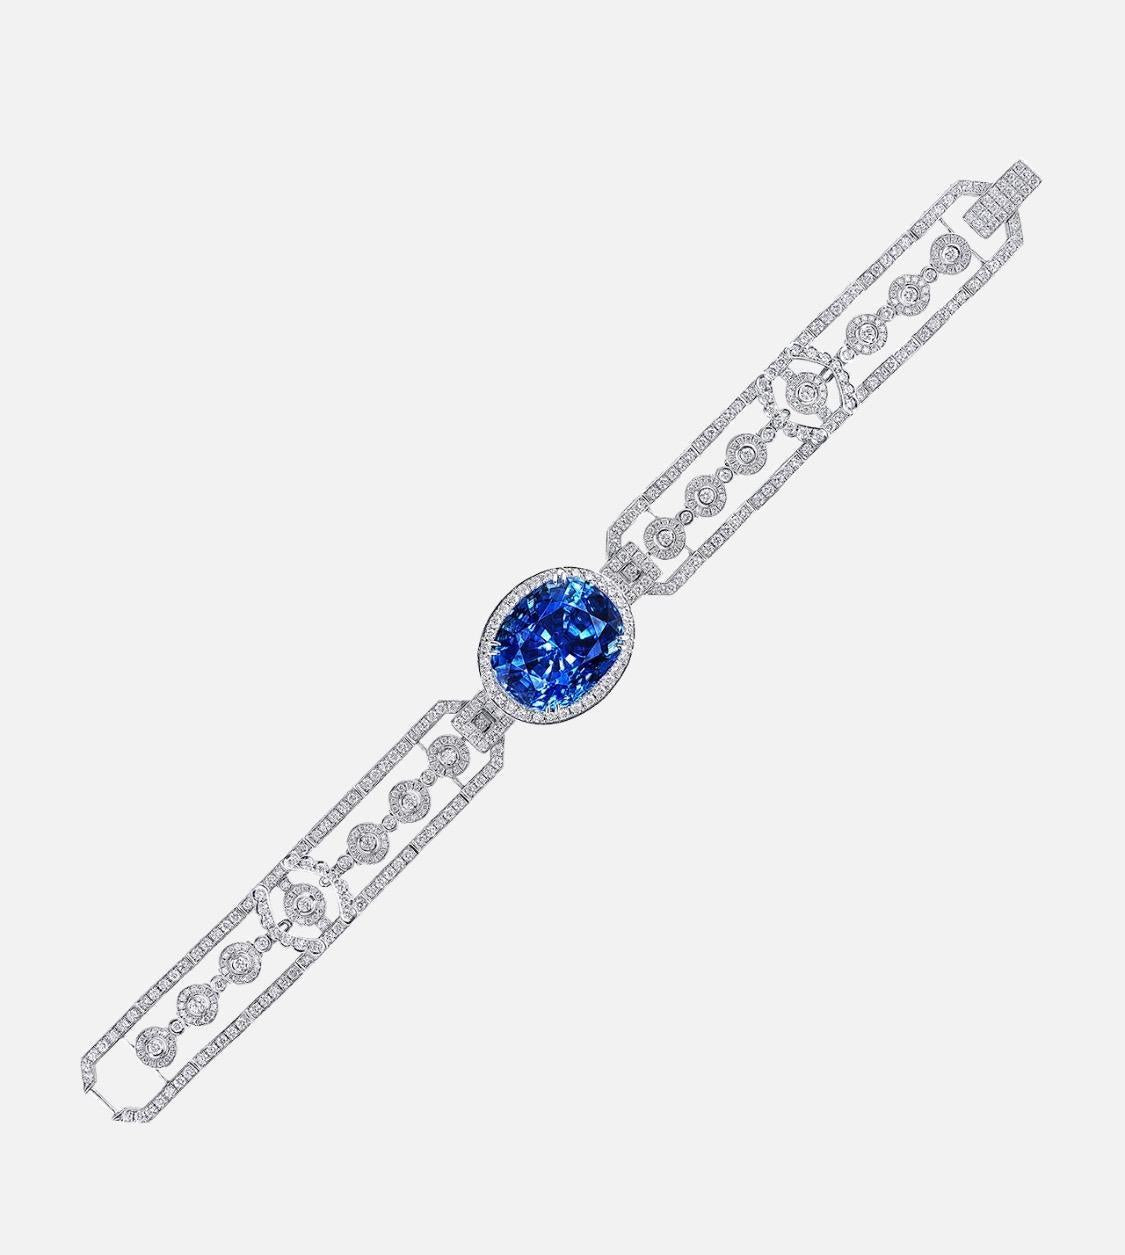 Emilio Jewelry Certified 23.00 Carat Untreated Sapphire Bracelet